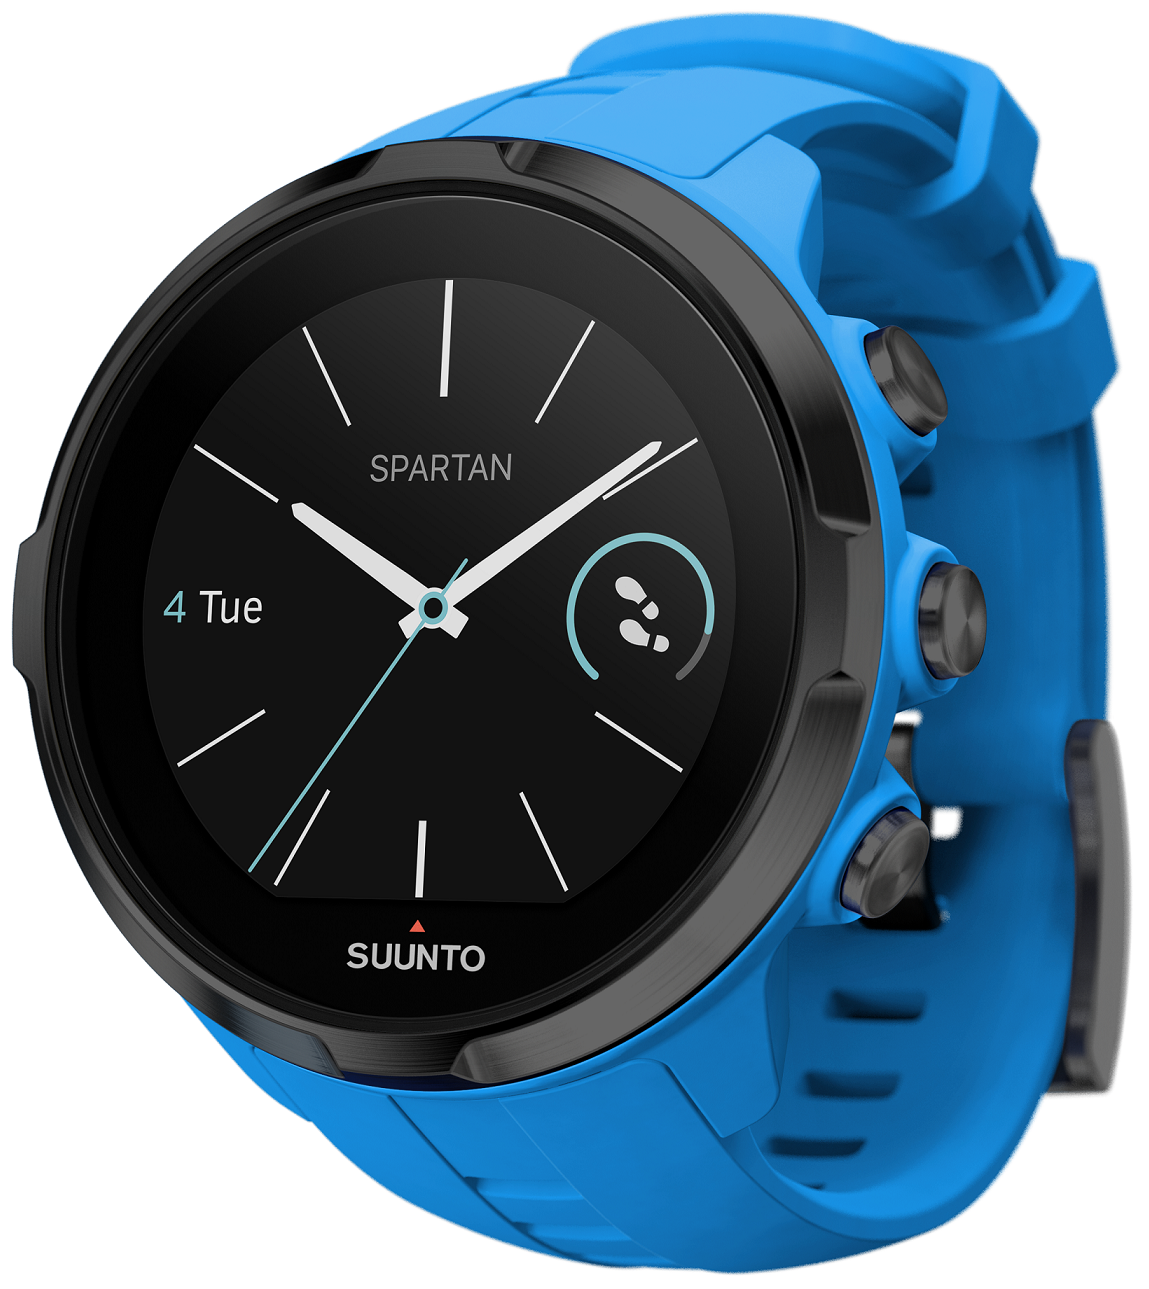 Часы Suunto Spartan Sport wrist HR Blue